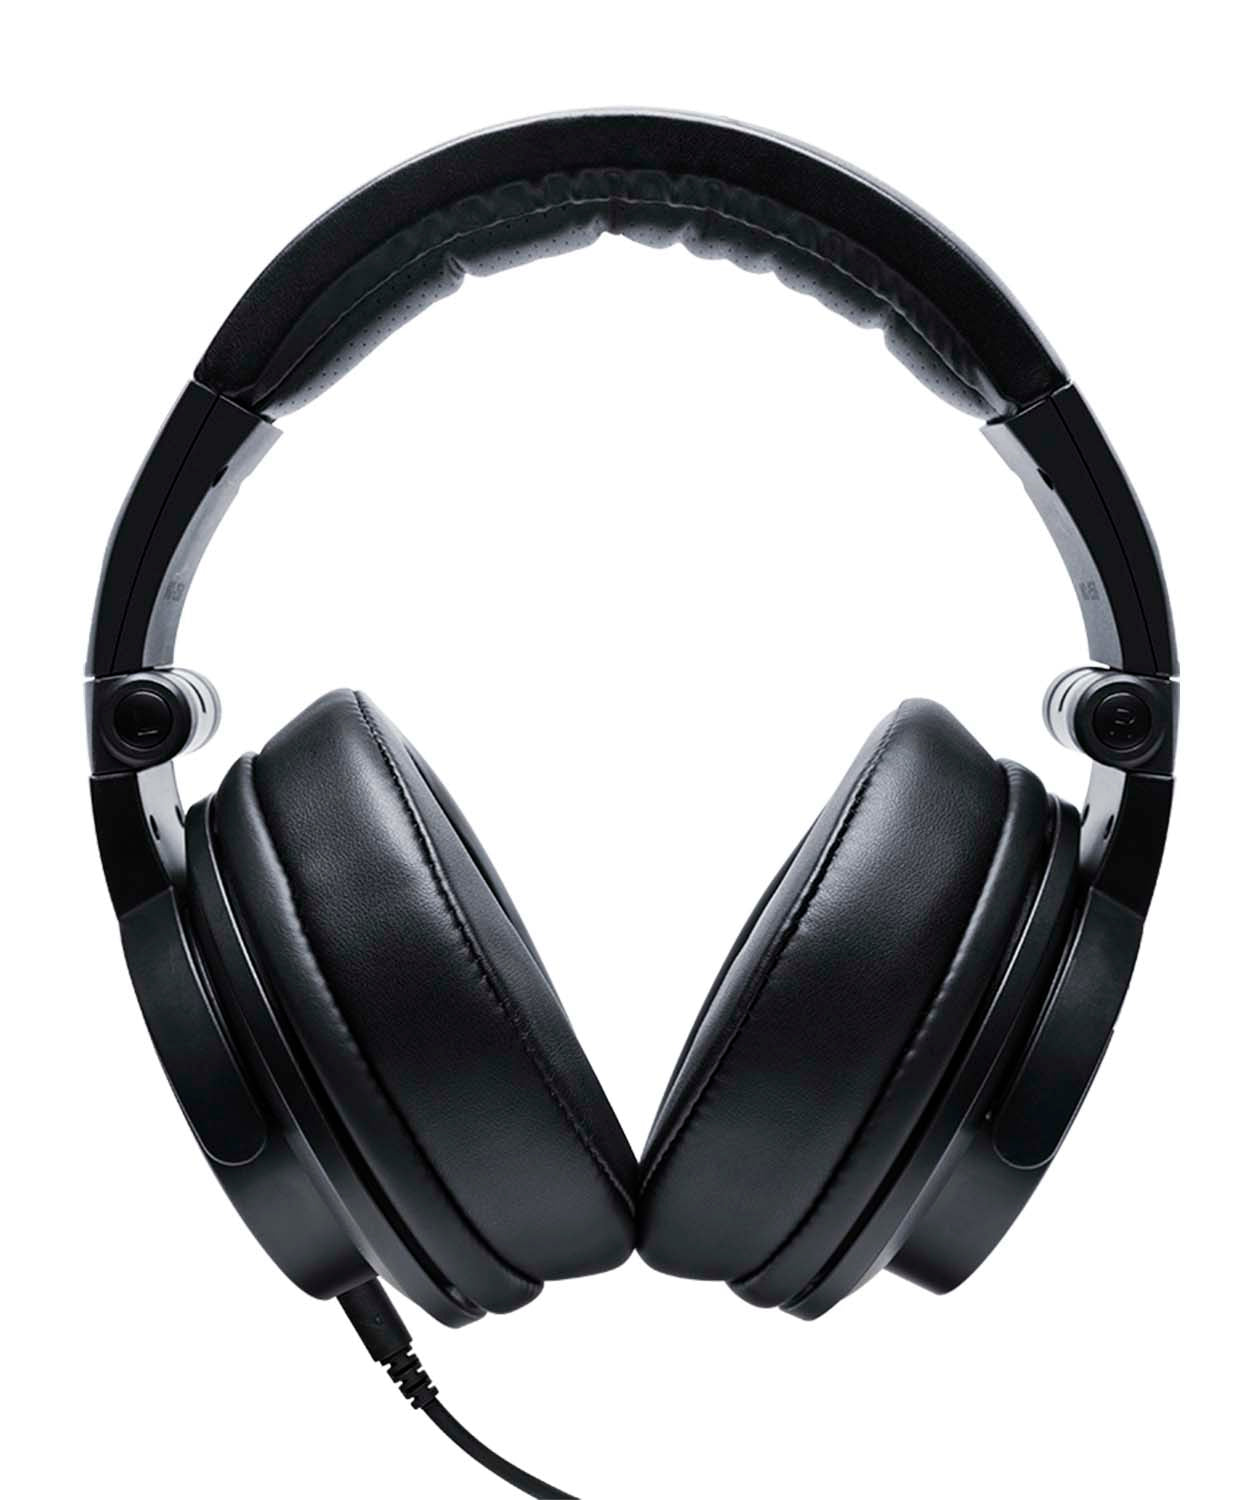 B-Stock: Mackie MC-250 Professional Closed-Back DJ Headphones by Mackie